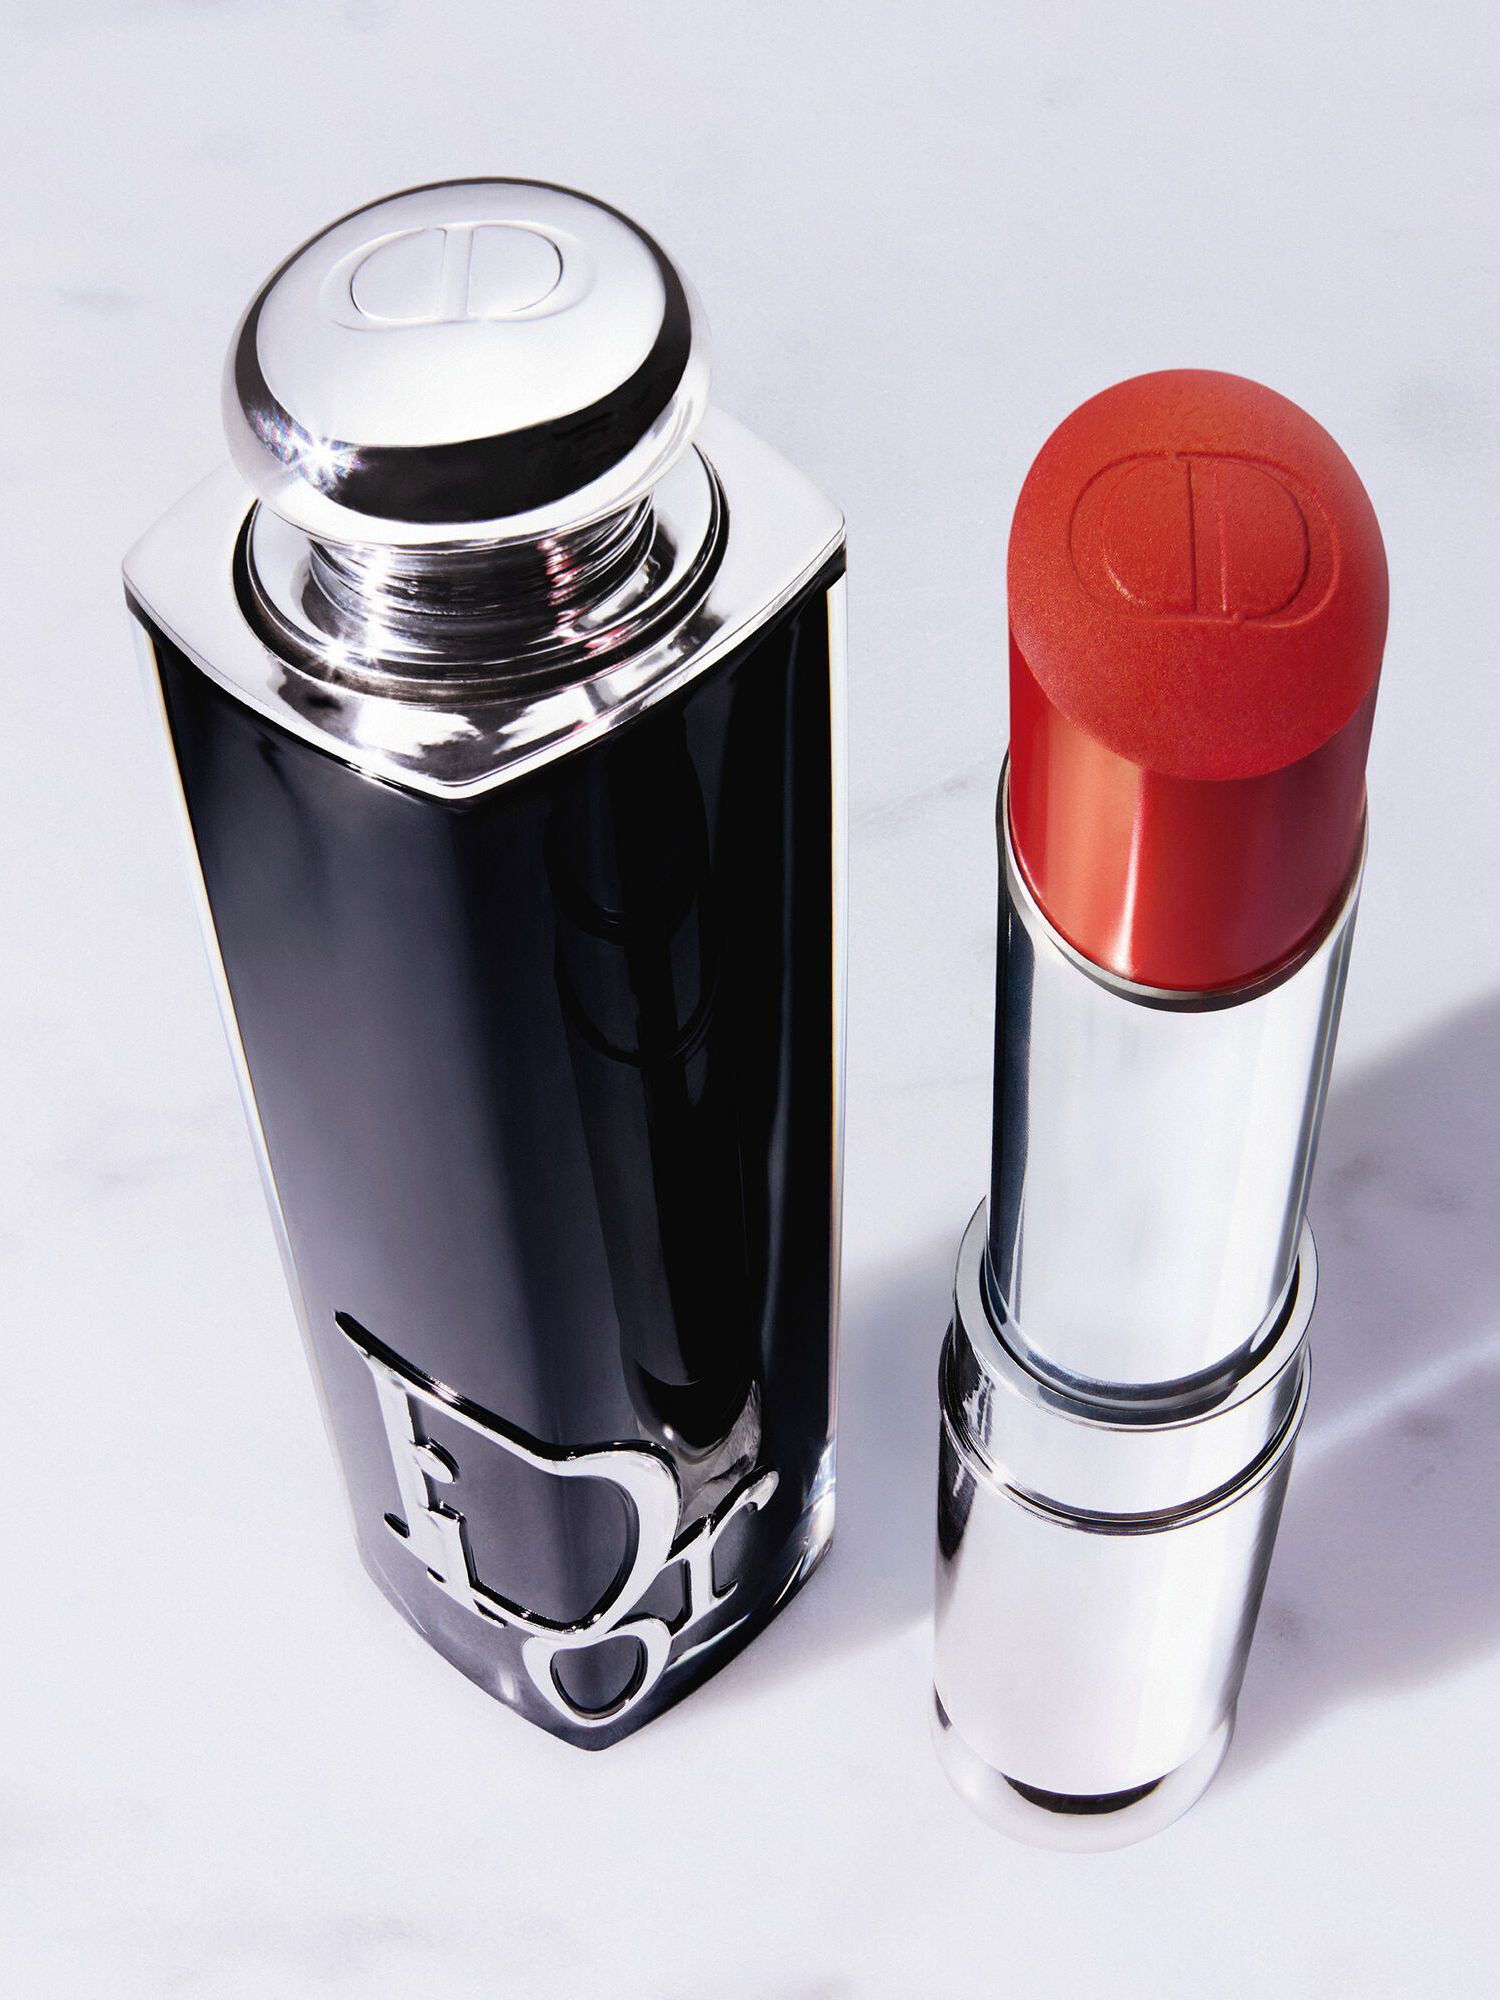 DIOR Addict Shine Lipstick Refill, 422 Rose des Vents at John